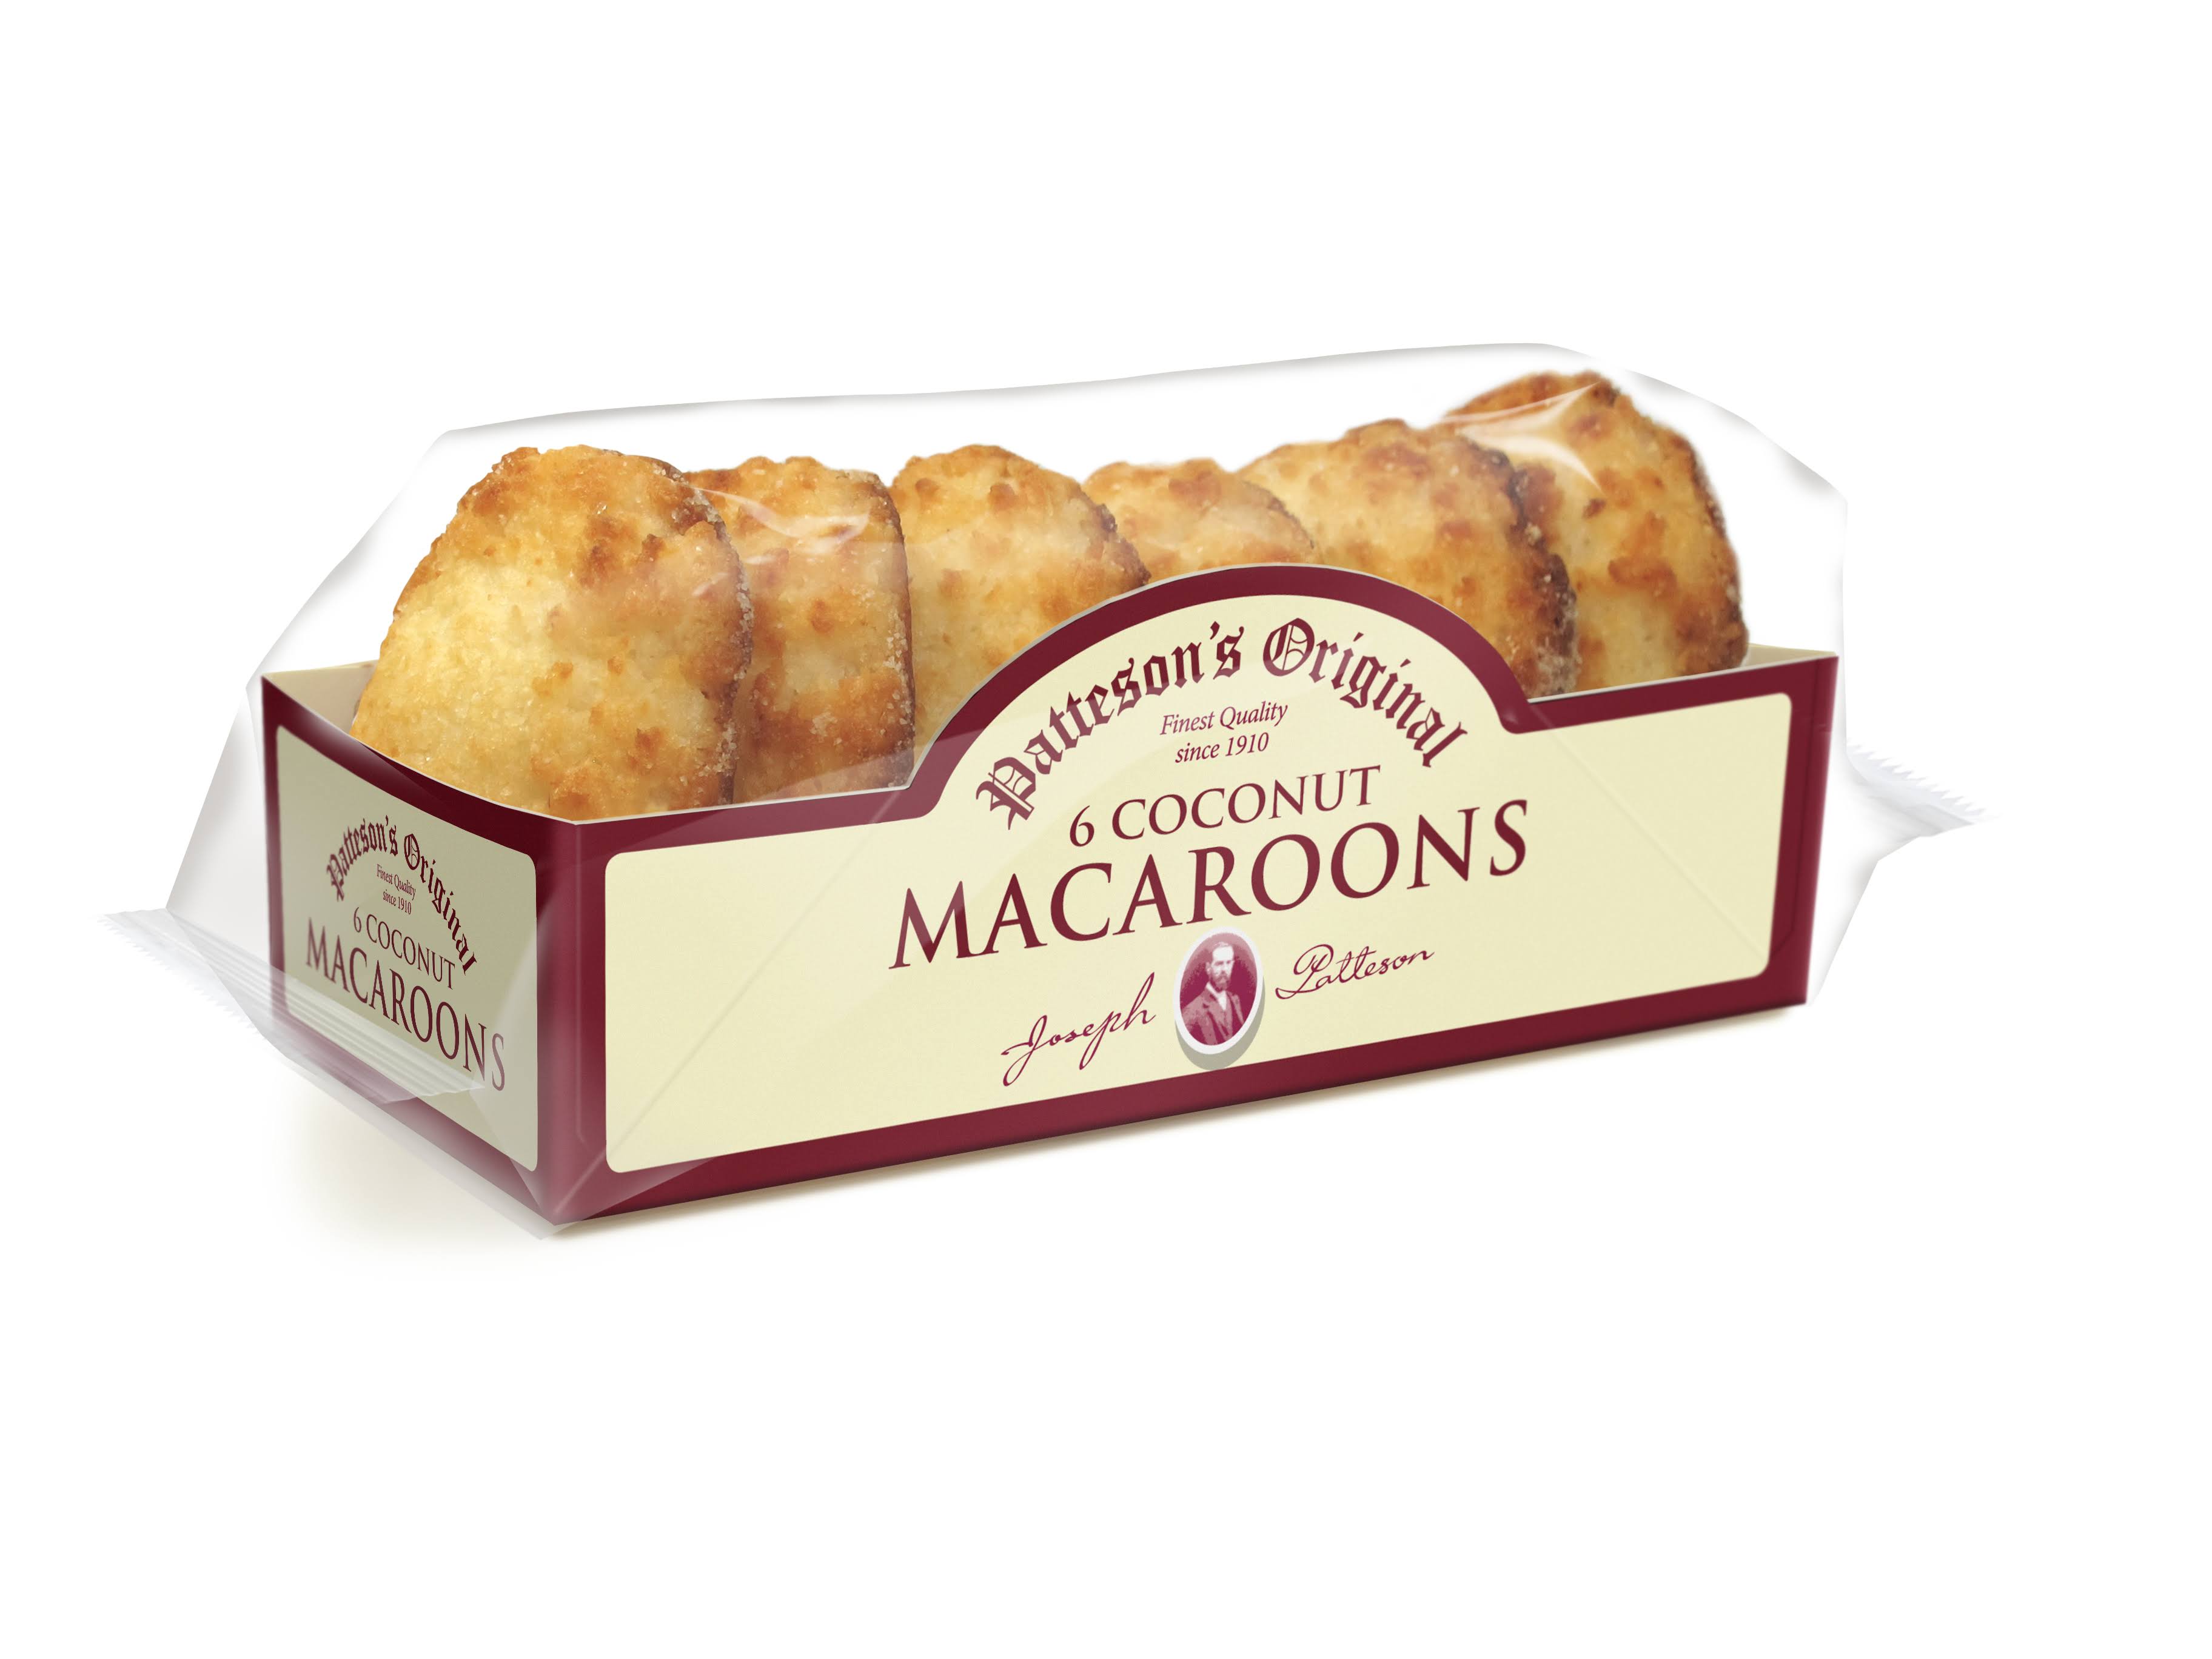 Patteson's Original Plain Macaroons